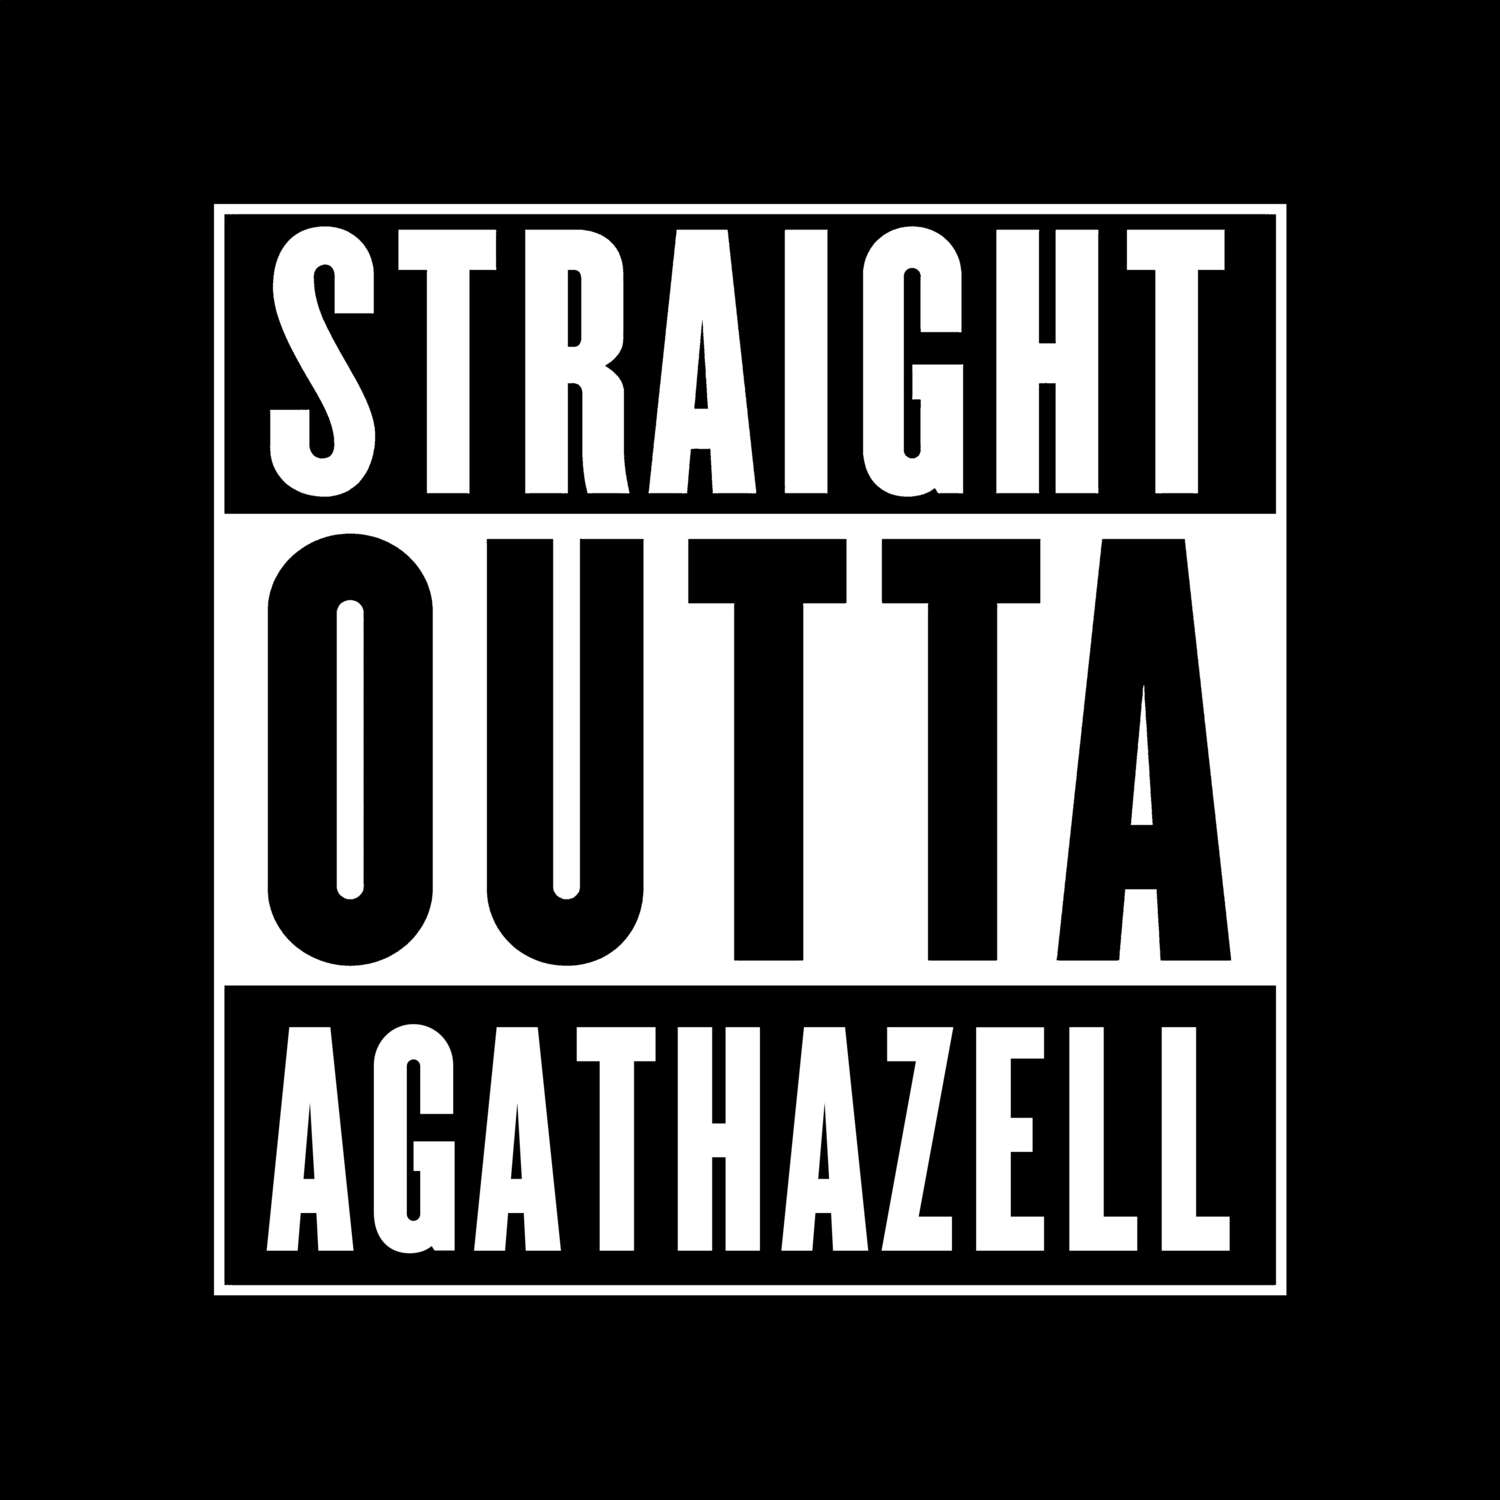 Agathazell T-Shirt »Straight Outta«